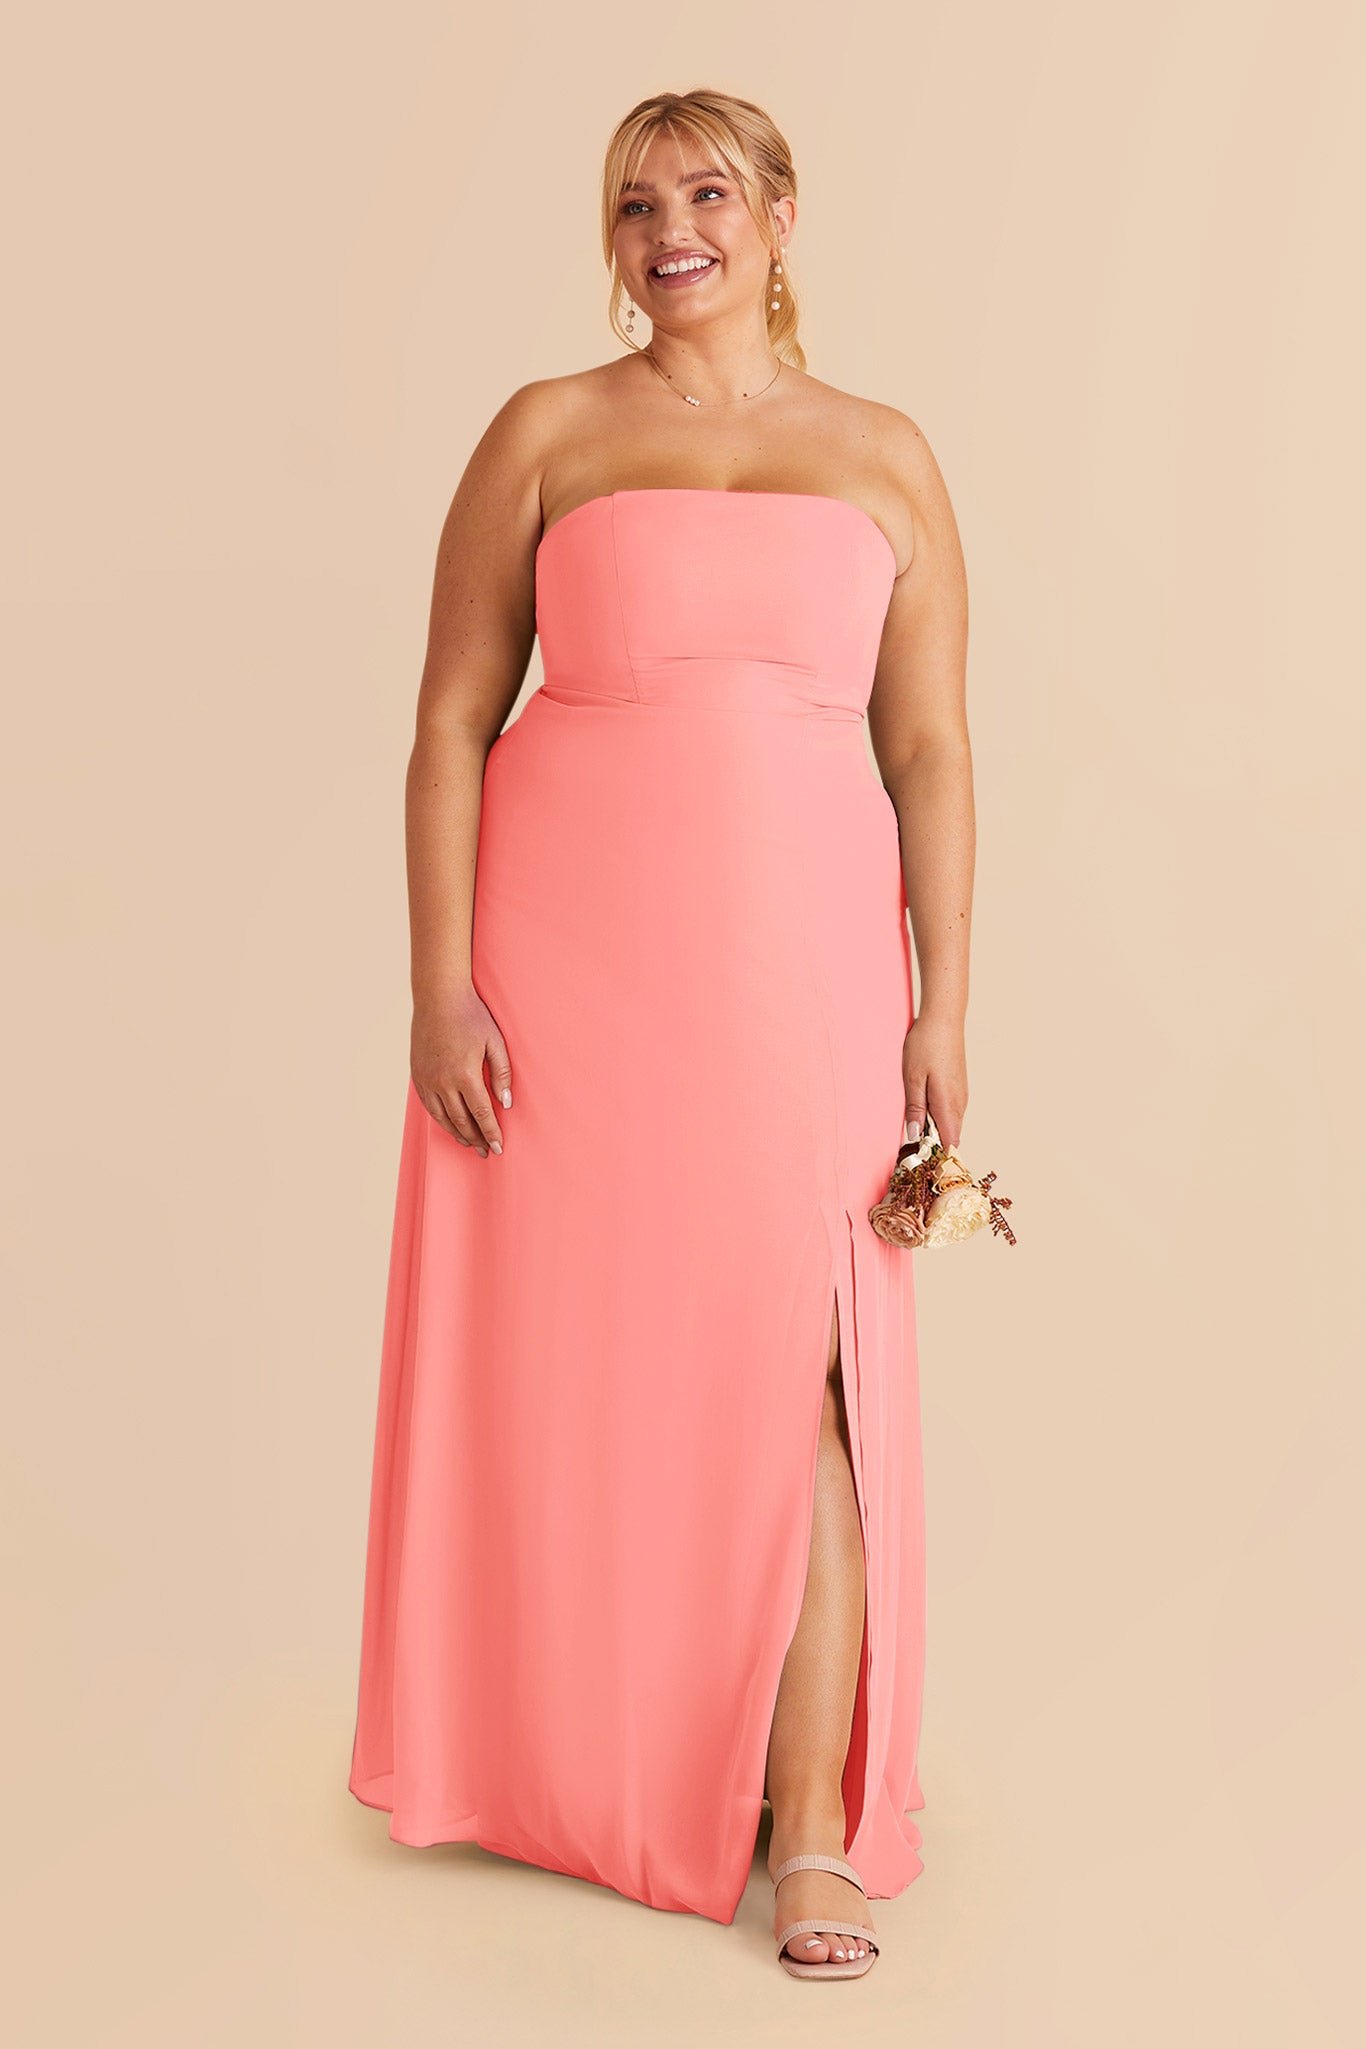 Coral Pink Chris Convertible Chiffon Dress by Birdy Grey